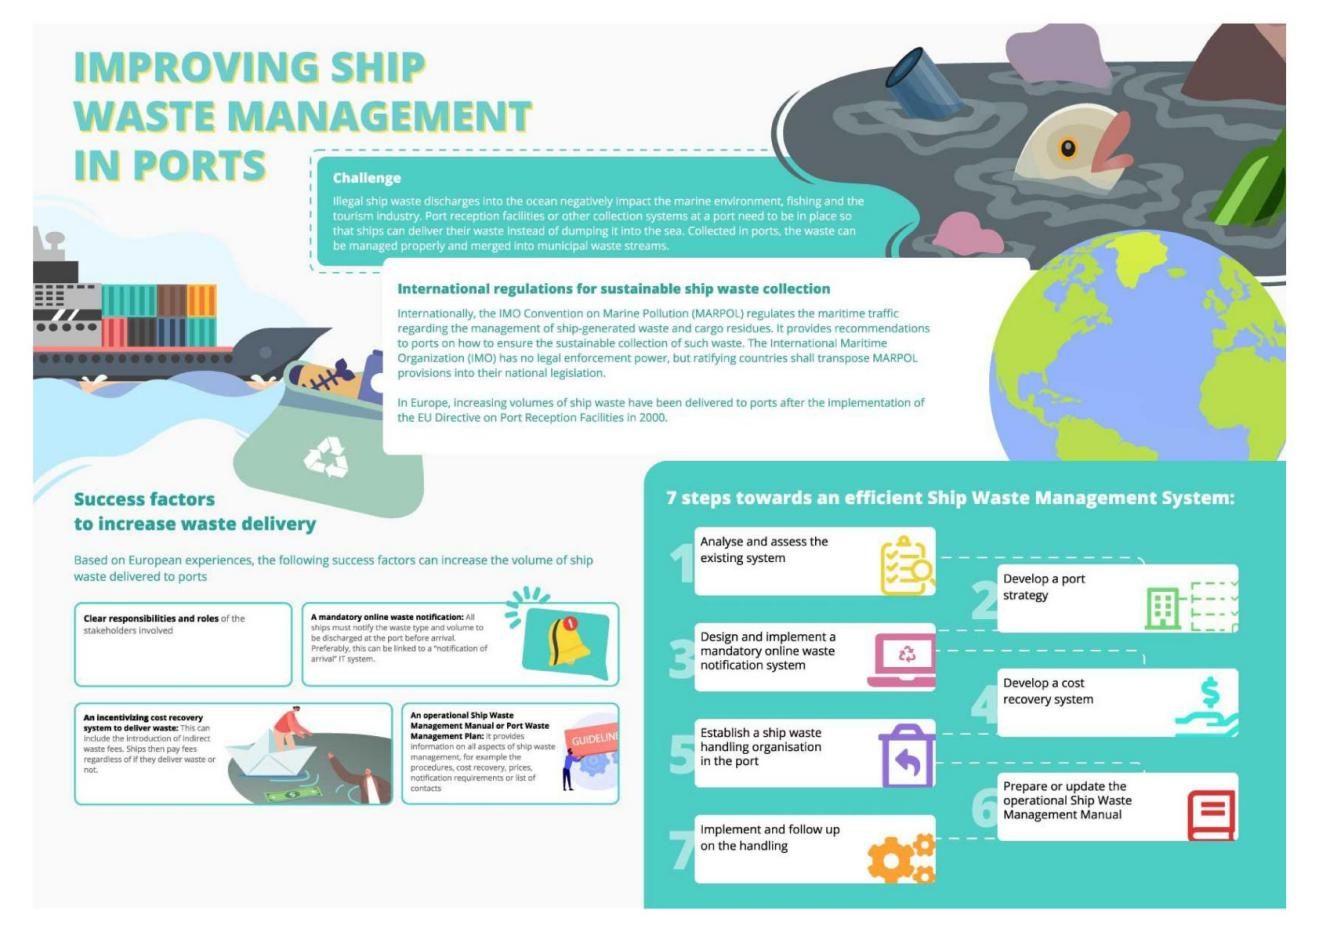 Seven steps towards improving ship waste management in ports. Source: Rethinking Plastics